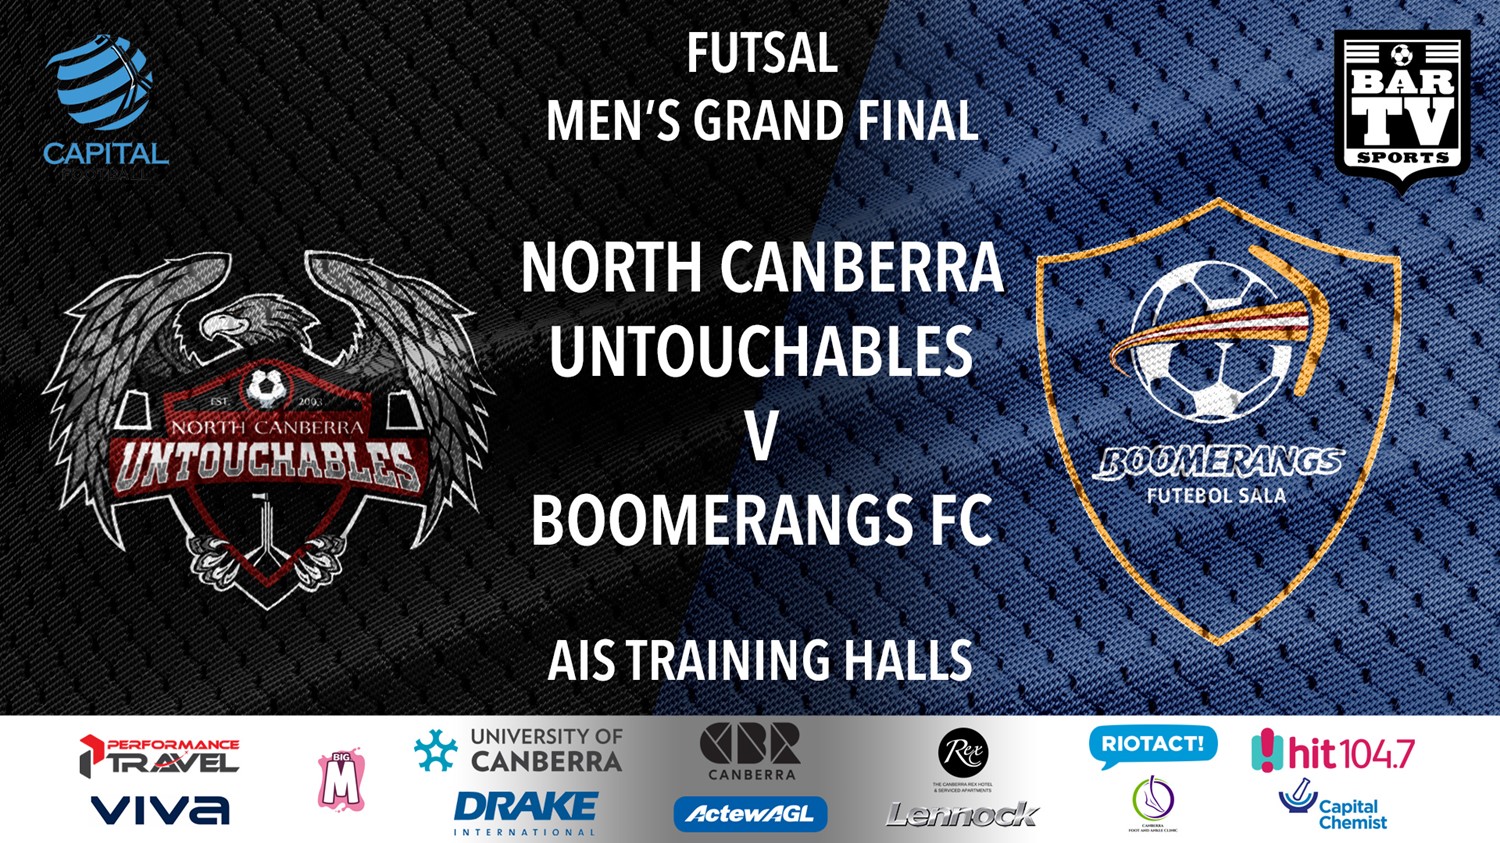 Capital Football Futsal Men's Grand Final - North Canberra Untouchables v Boomerangs FC Slate Image